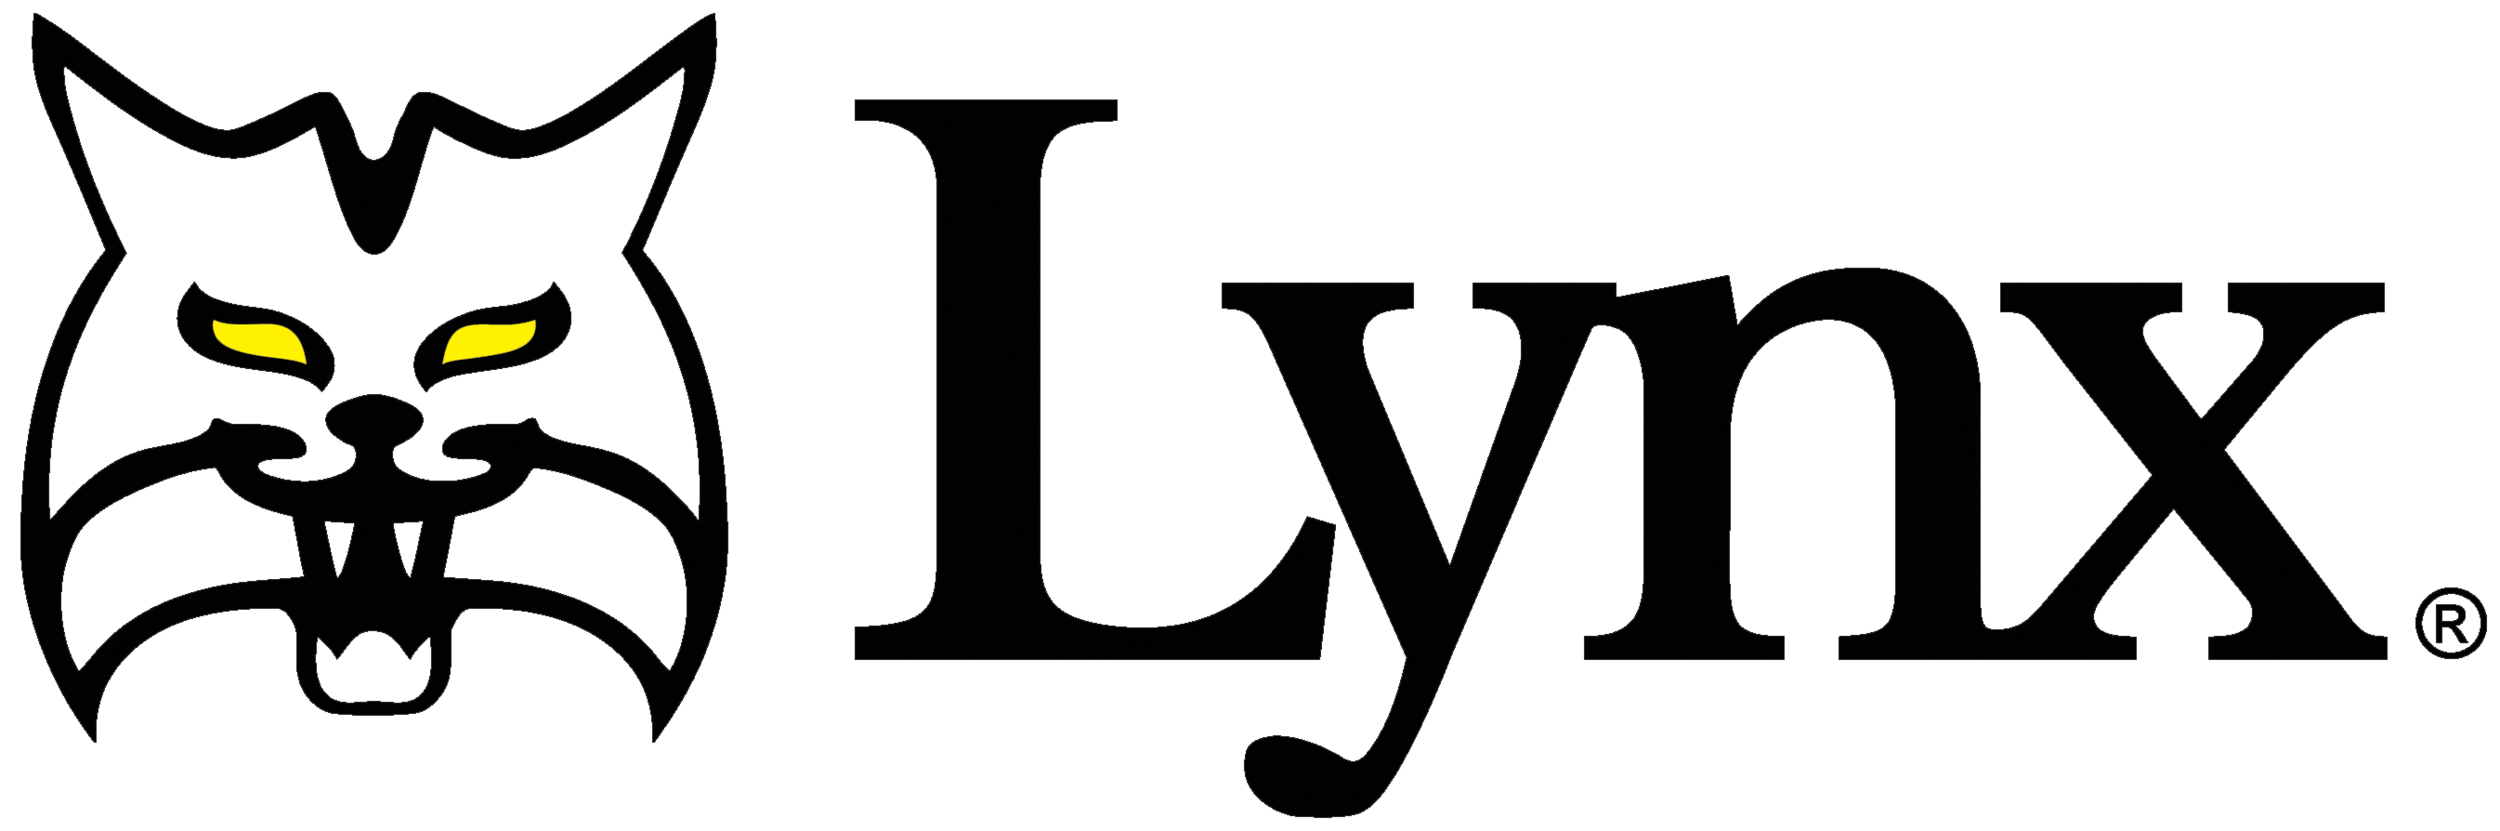 lynx-logo.png